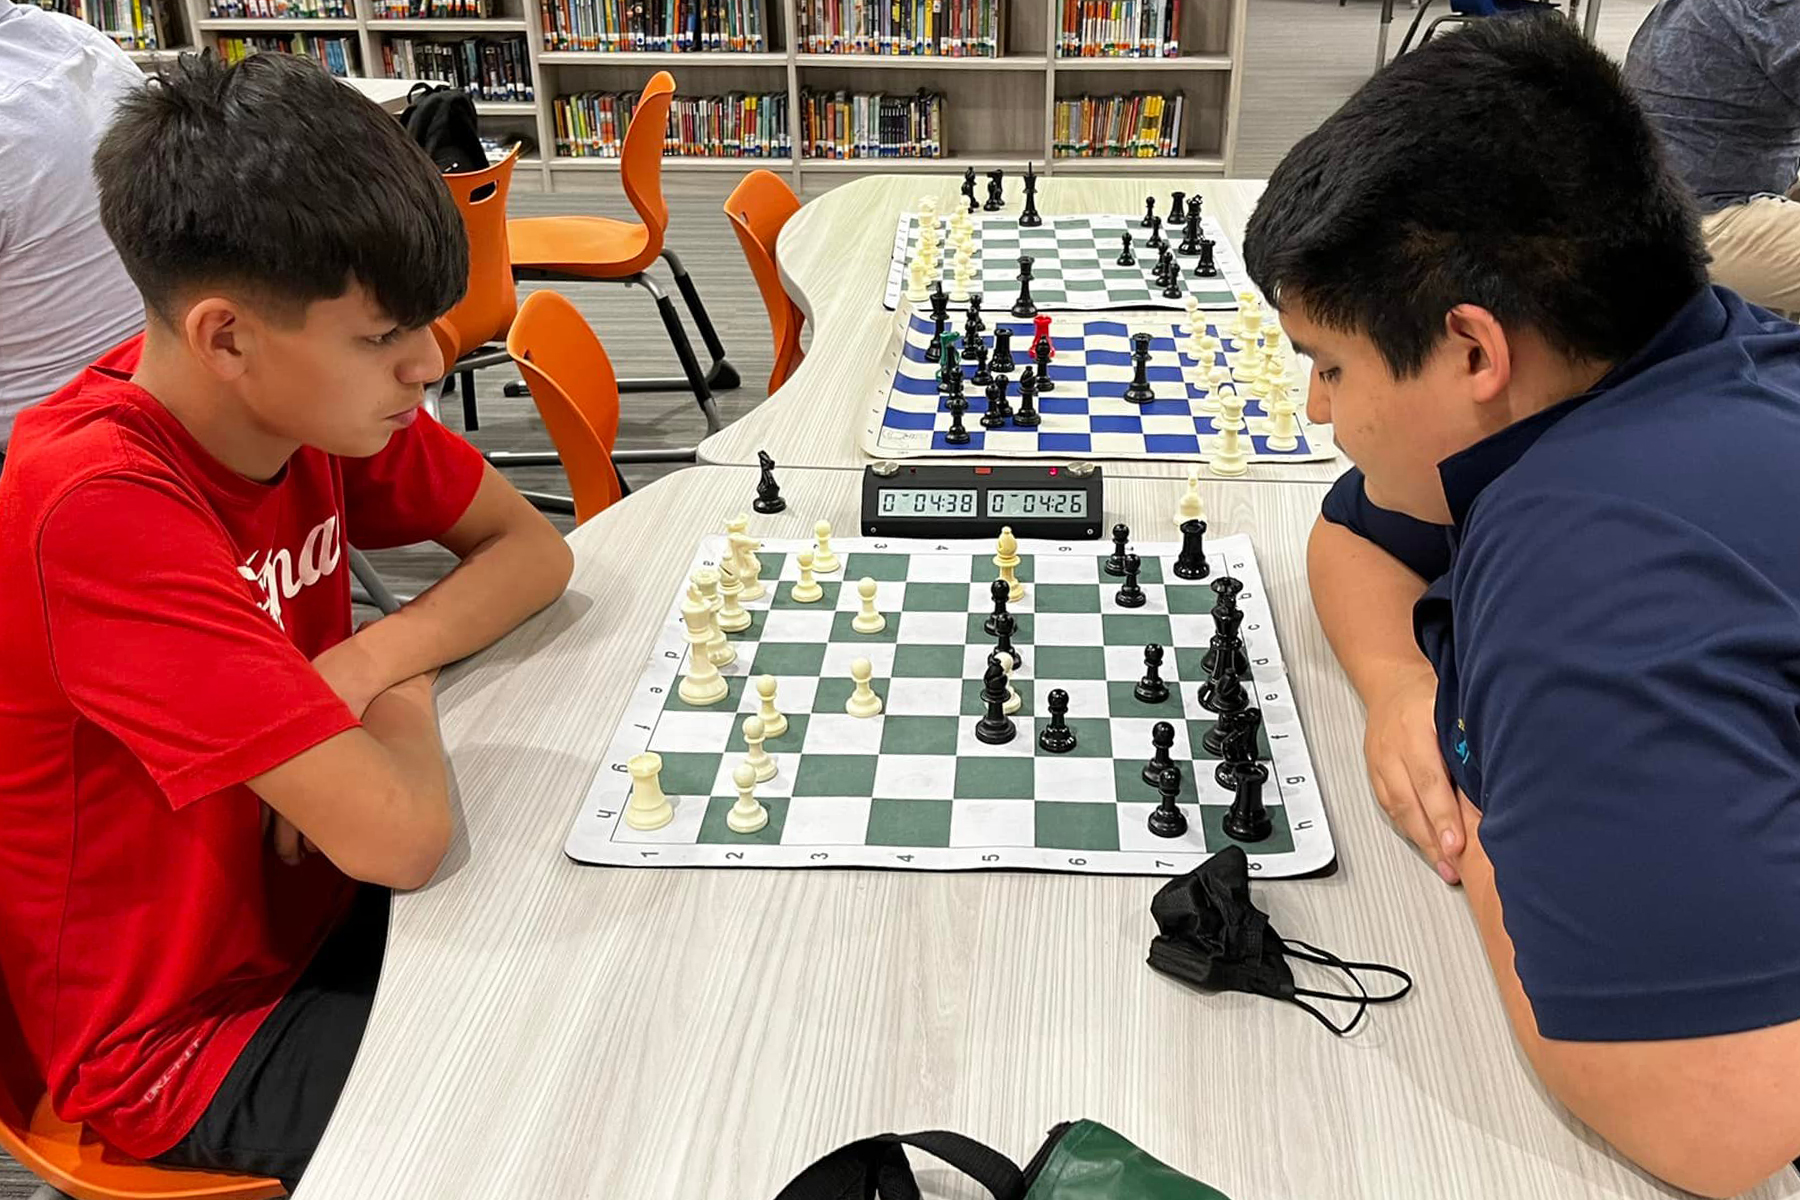 Chess regional winners advance to Nationals